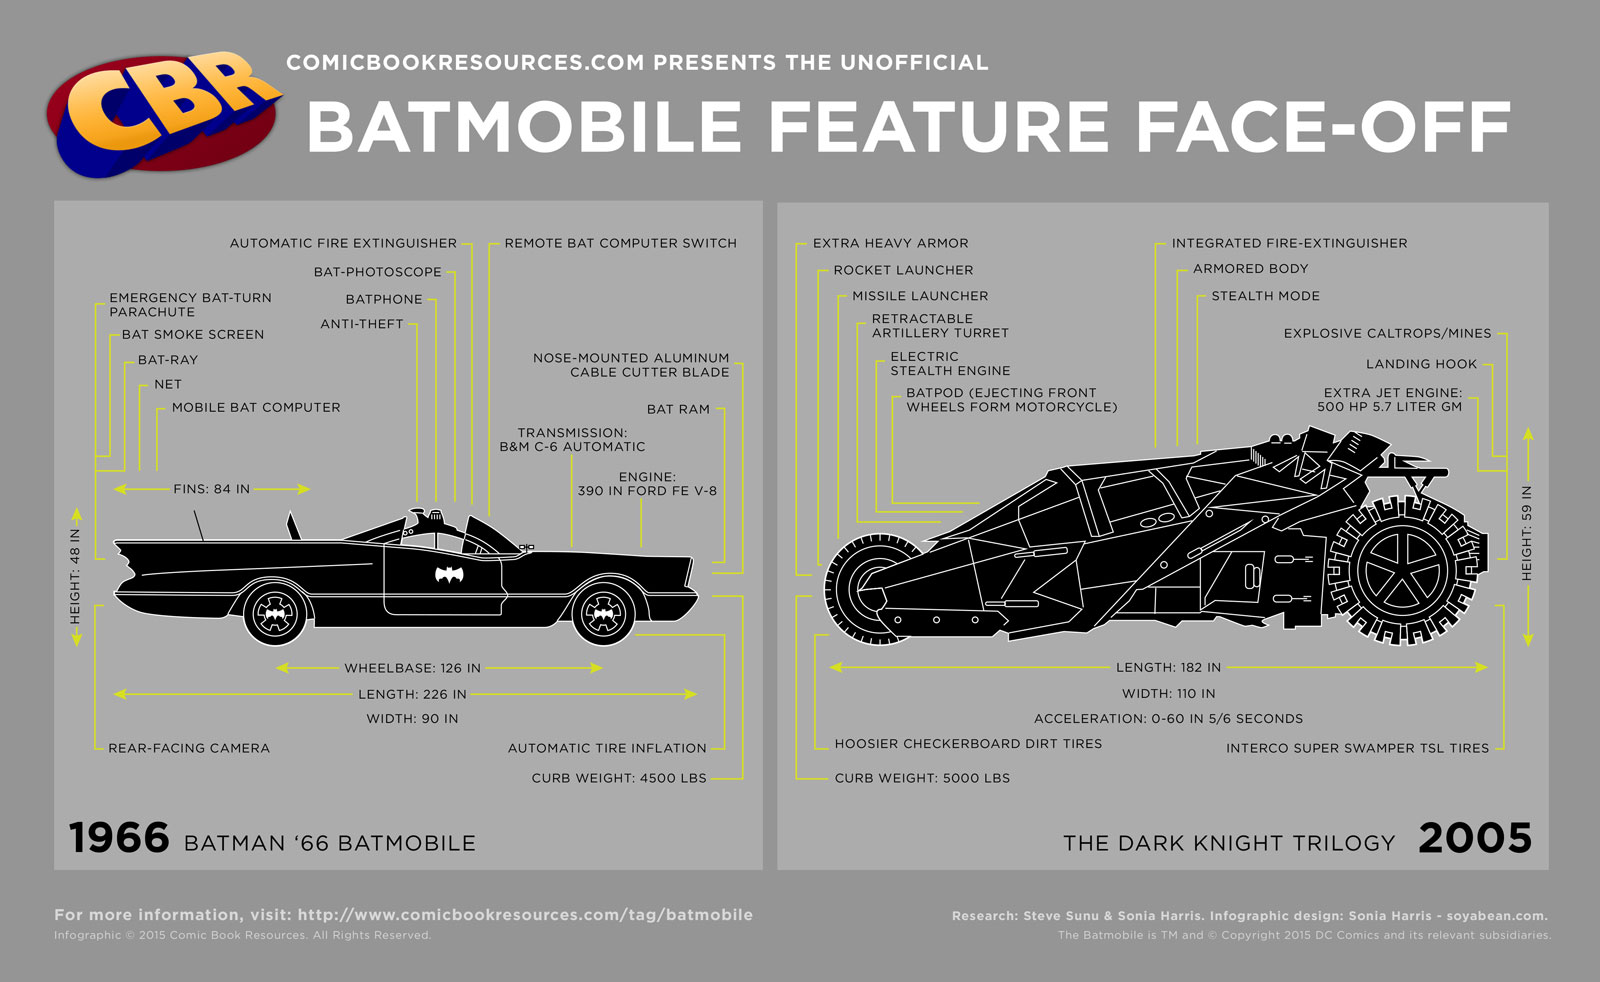 Batmobile Feature Comparison Infographic